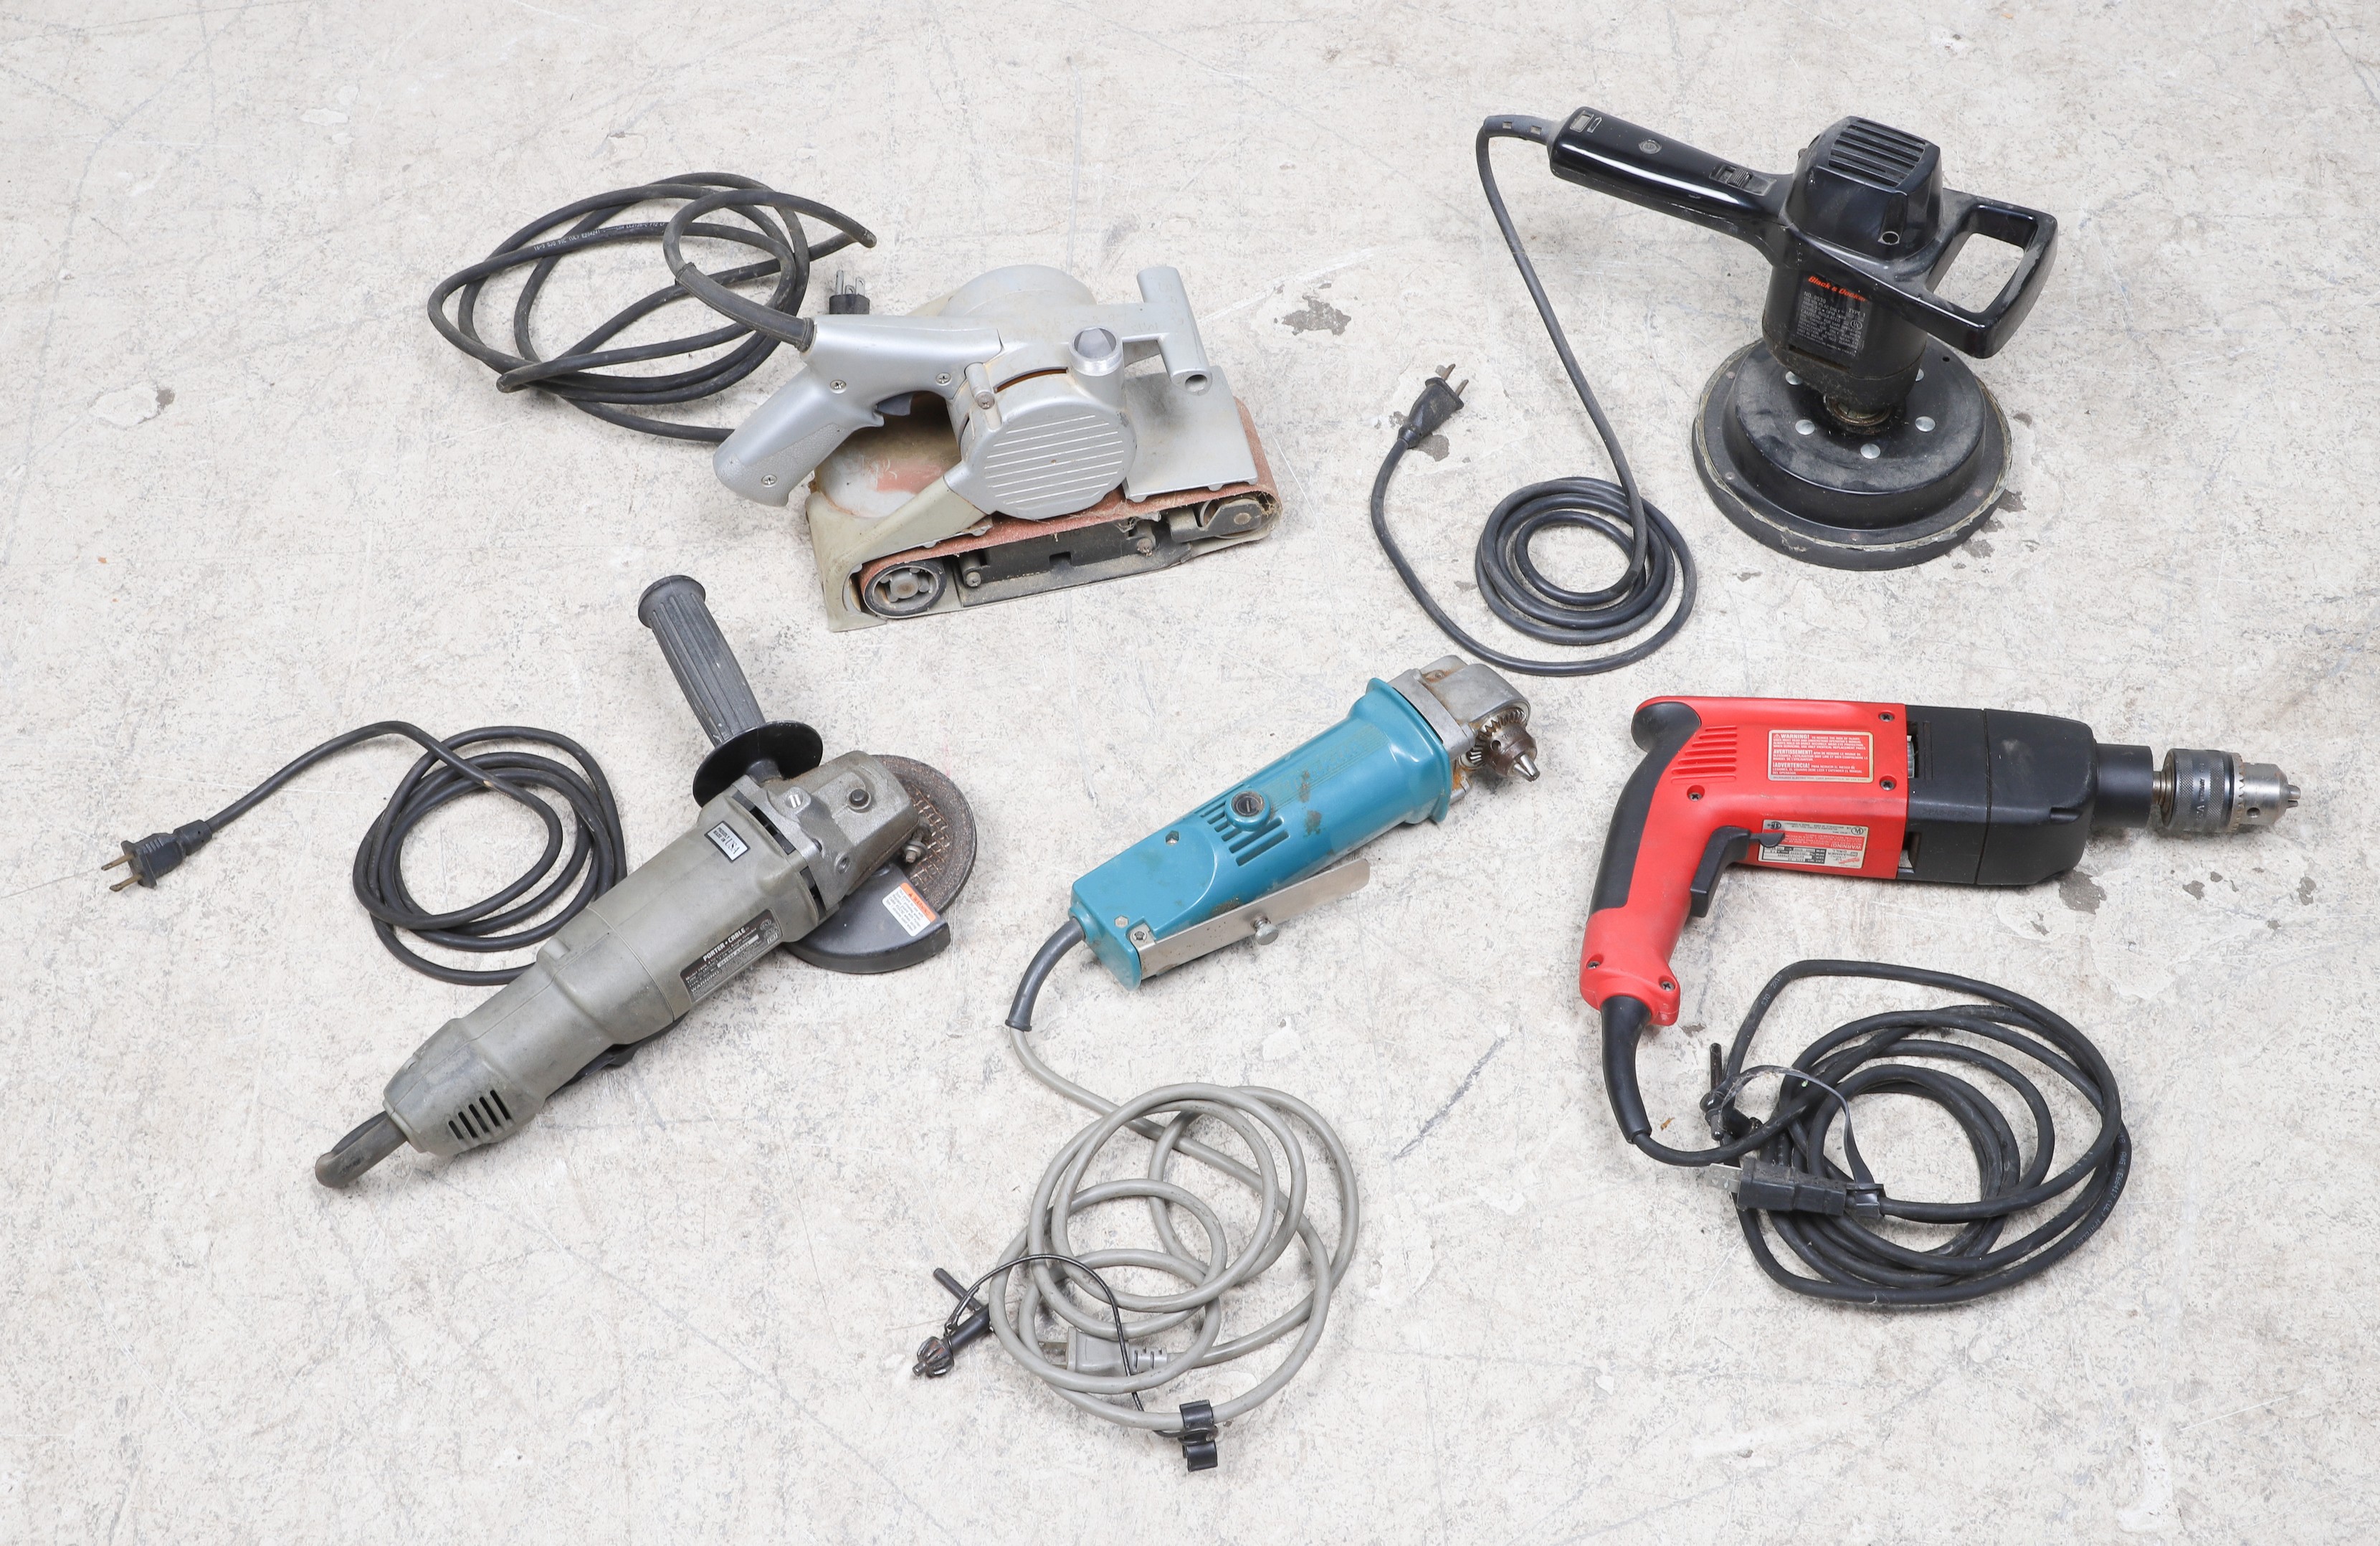  5 Power tools to include Milwaukee 2e17ff